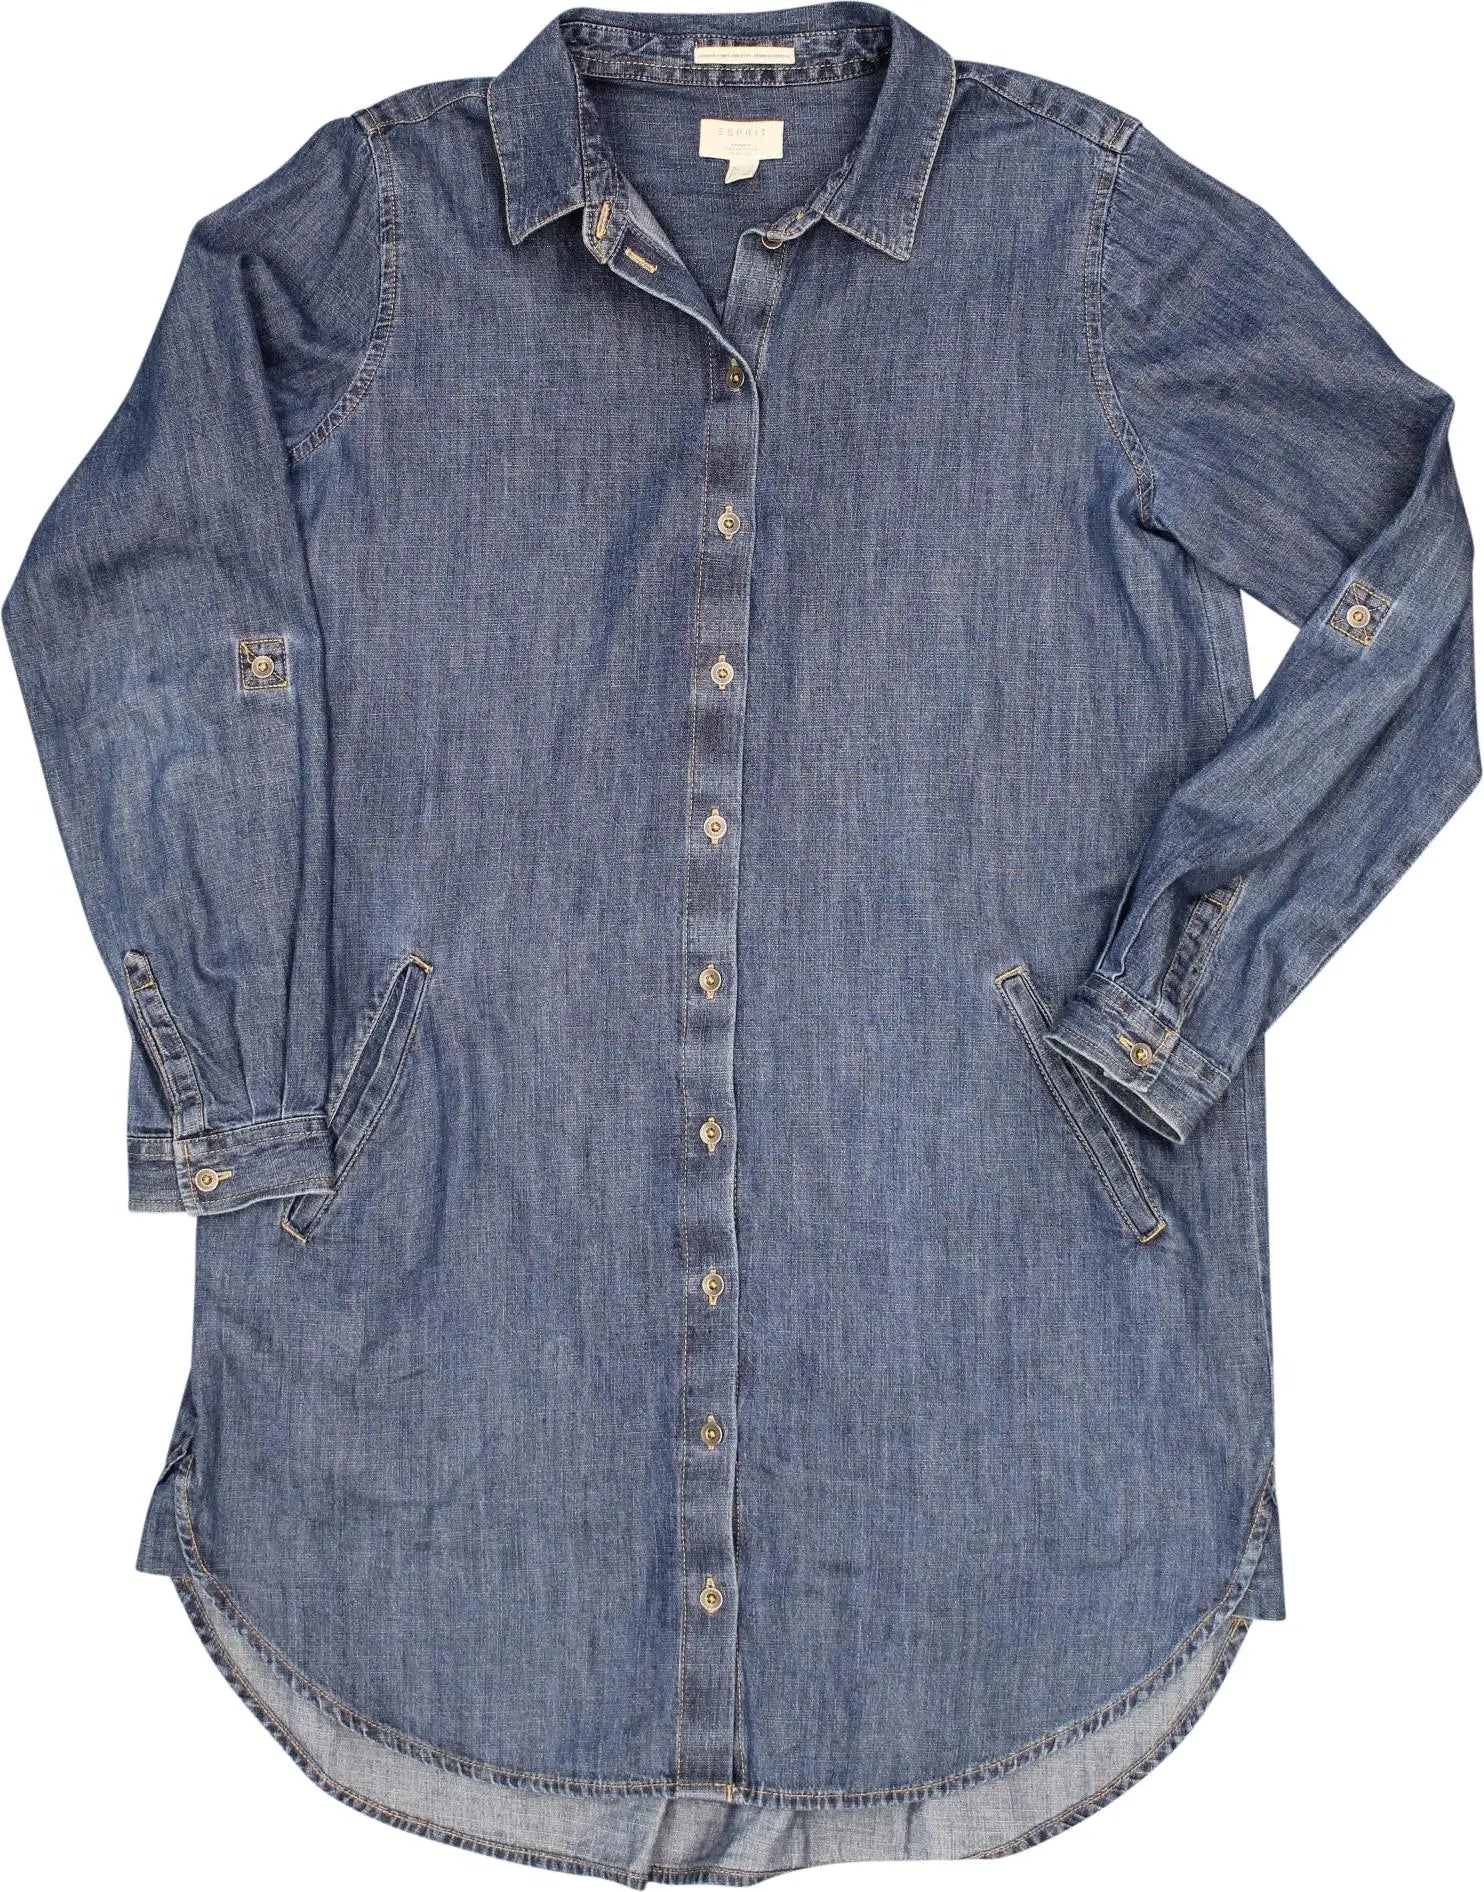 Esprit - BLUE0132- ThriftTale.com - Vintage and second handclothing